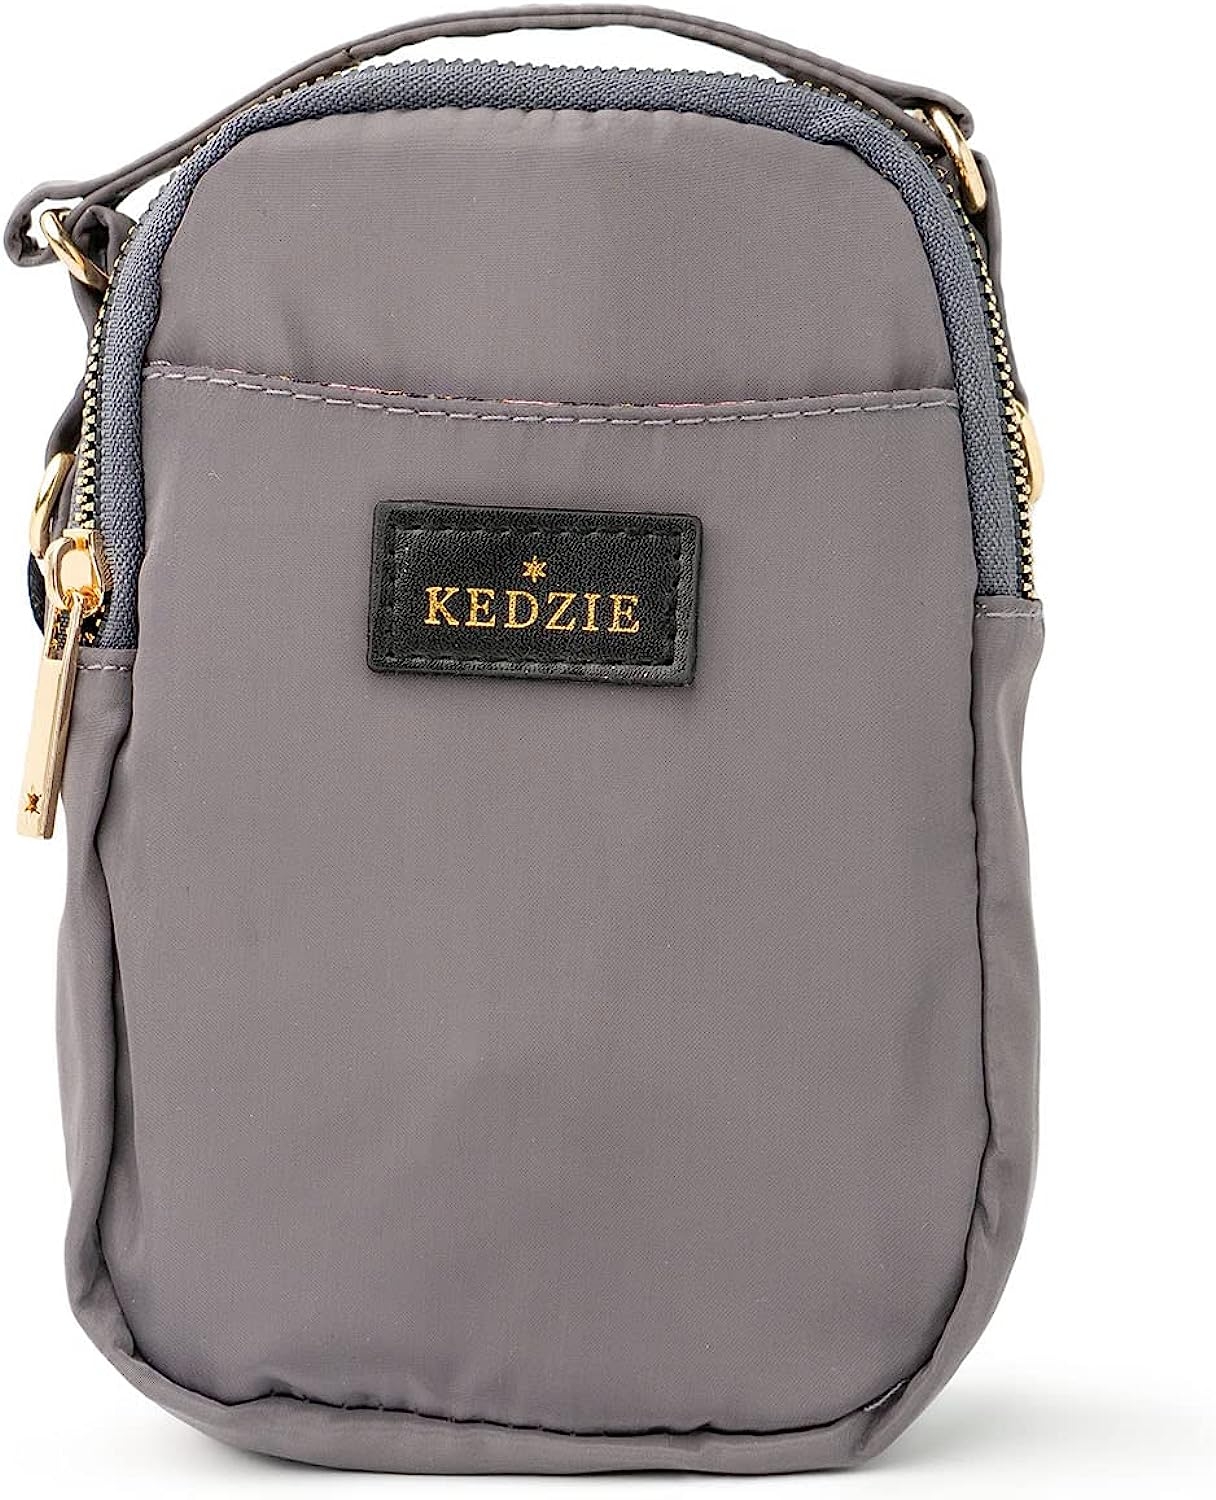 KEDZIE Crosstown Crossbody Zipper Bag with Adjustable Strap   price checker   price checker Description Gallery Reviews